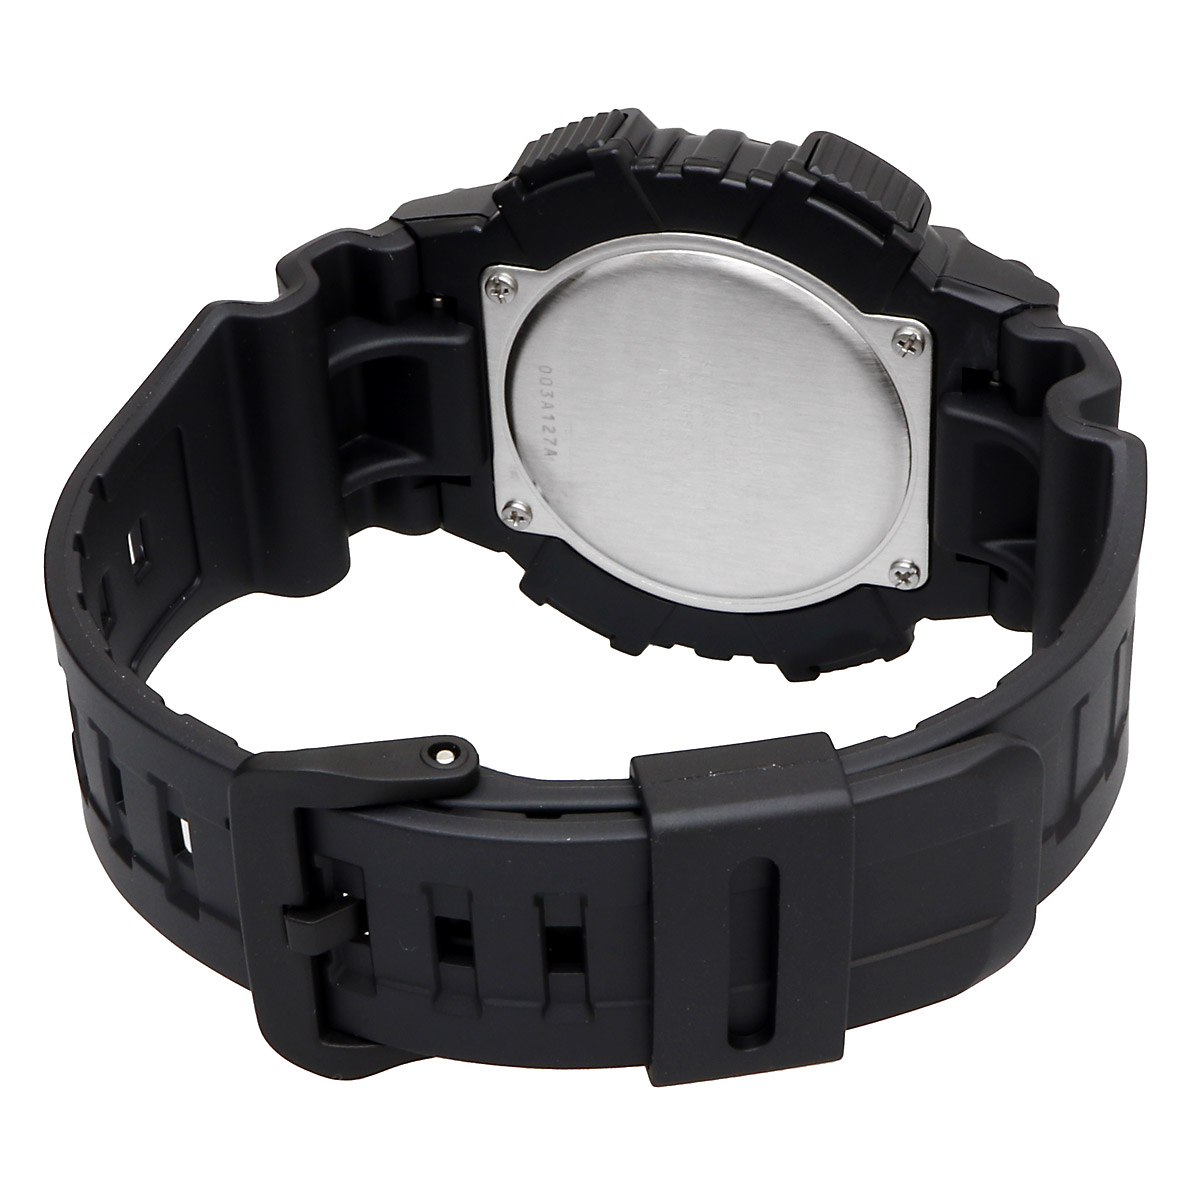 CASIO カシオ 腕時計 メンズ チープカシオ チプカシ 海外モデル タフソーラー ワールドタイム アナログ デジタル AQ-S810W-1A3V